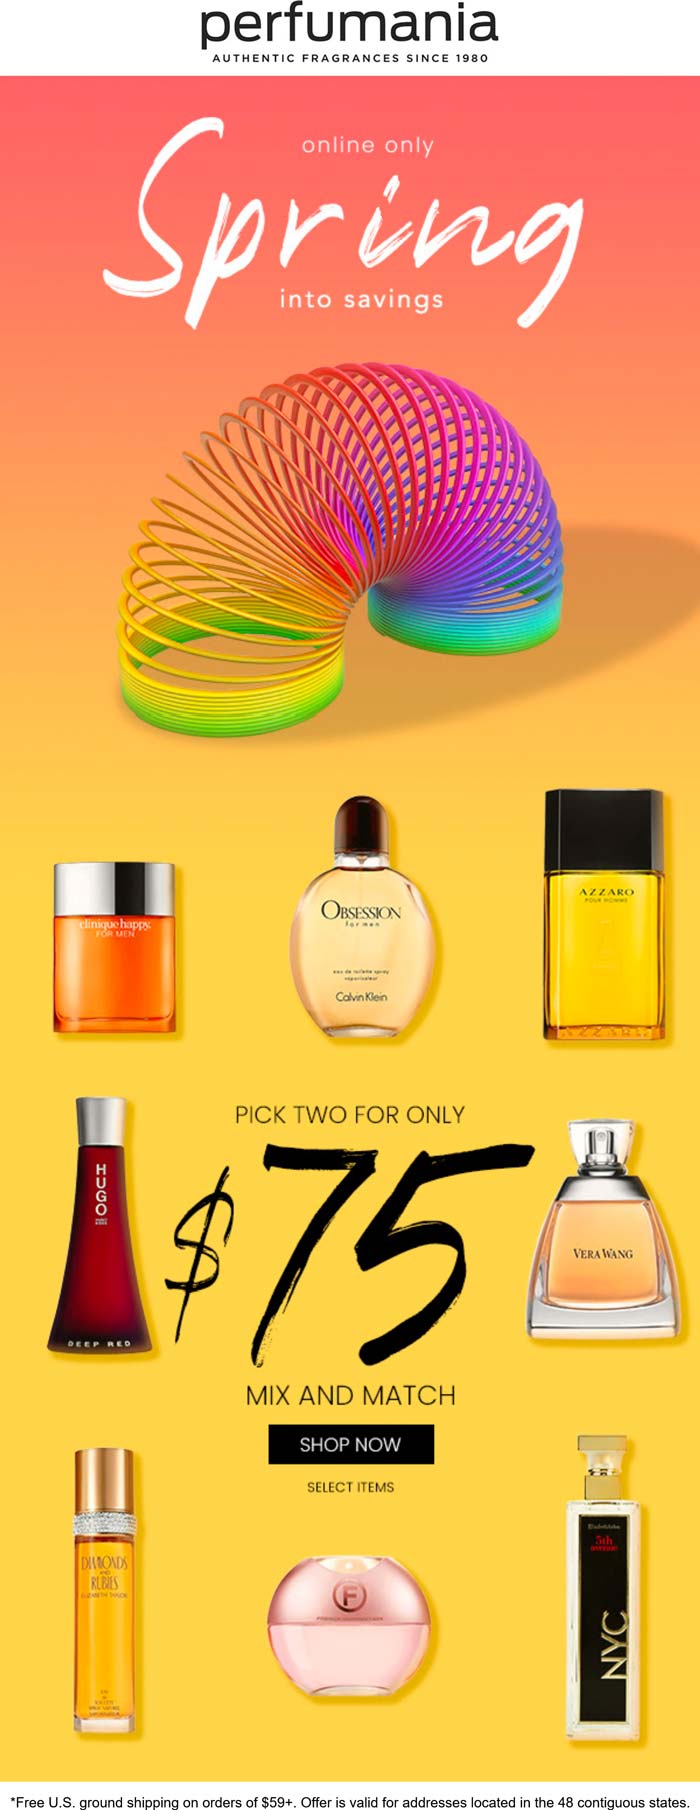 Perfumania stores Coupon  2 fragrances for $75 online at Perfumania #perfumania 